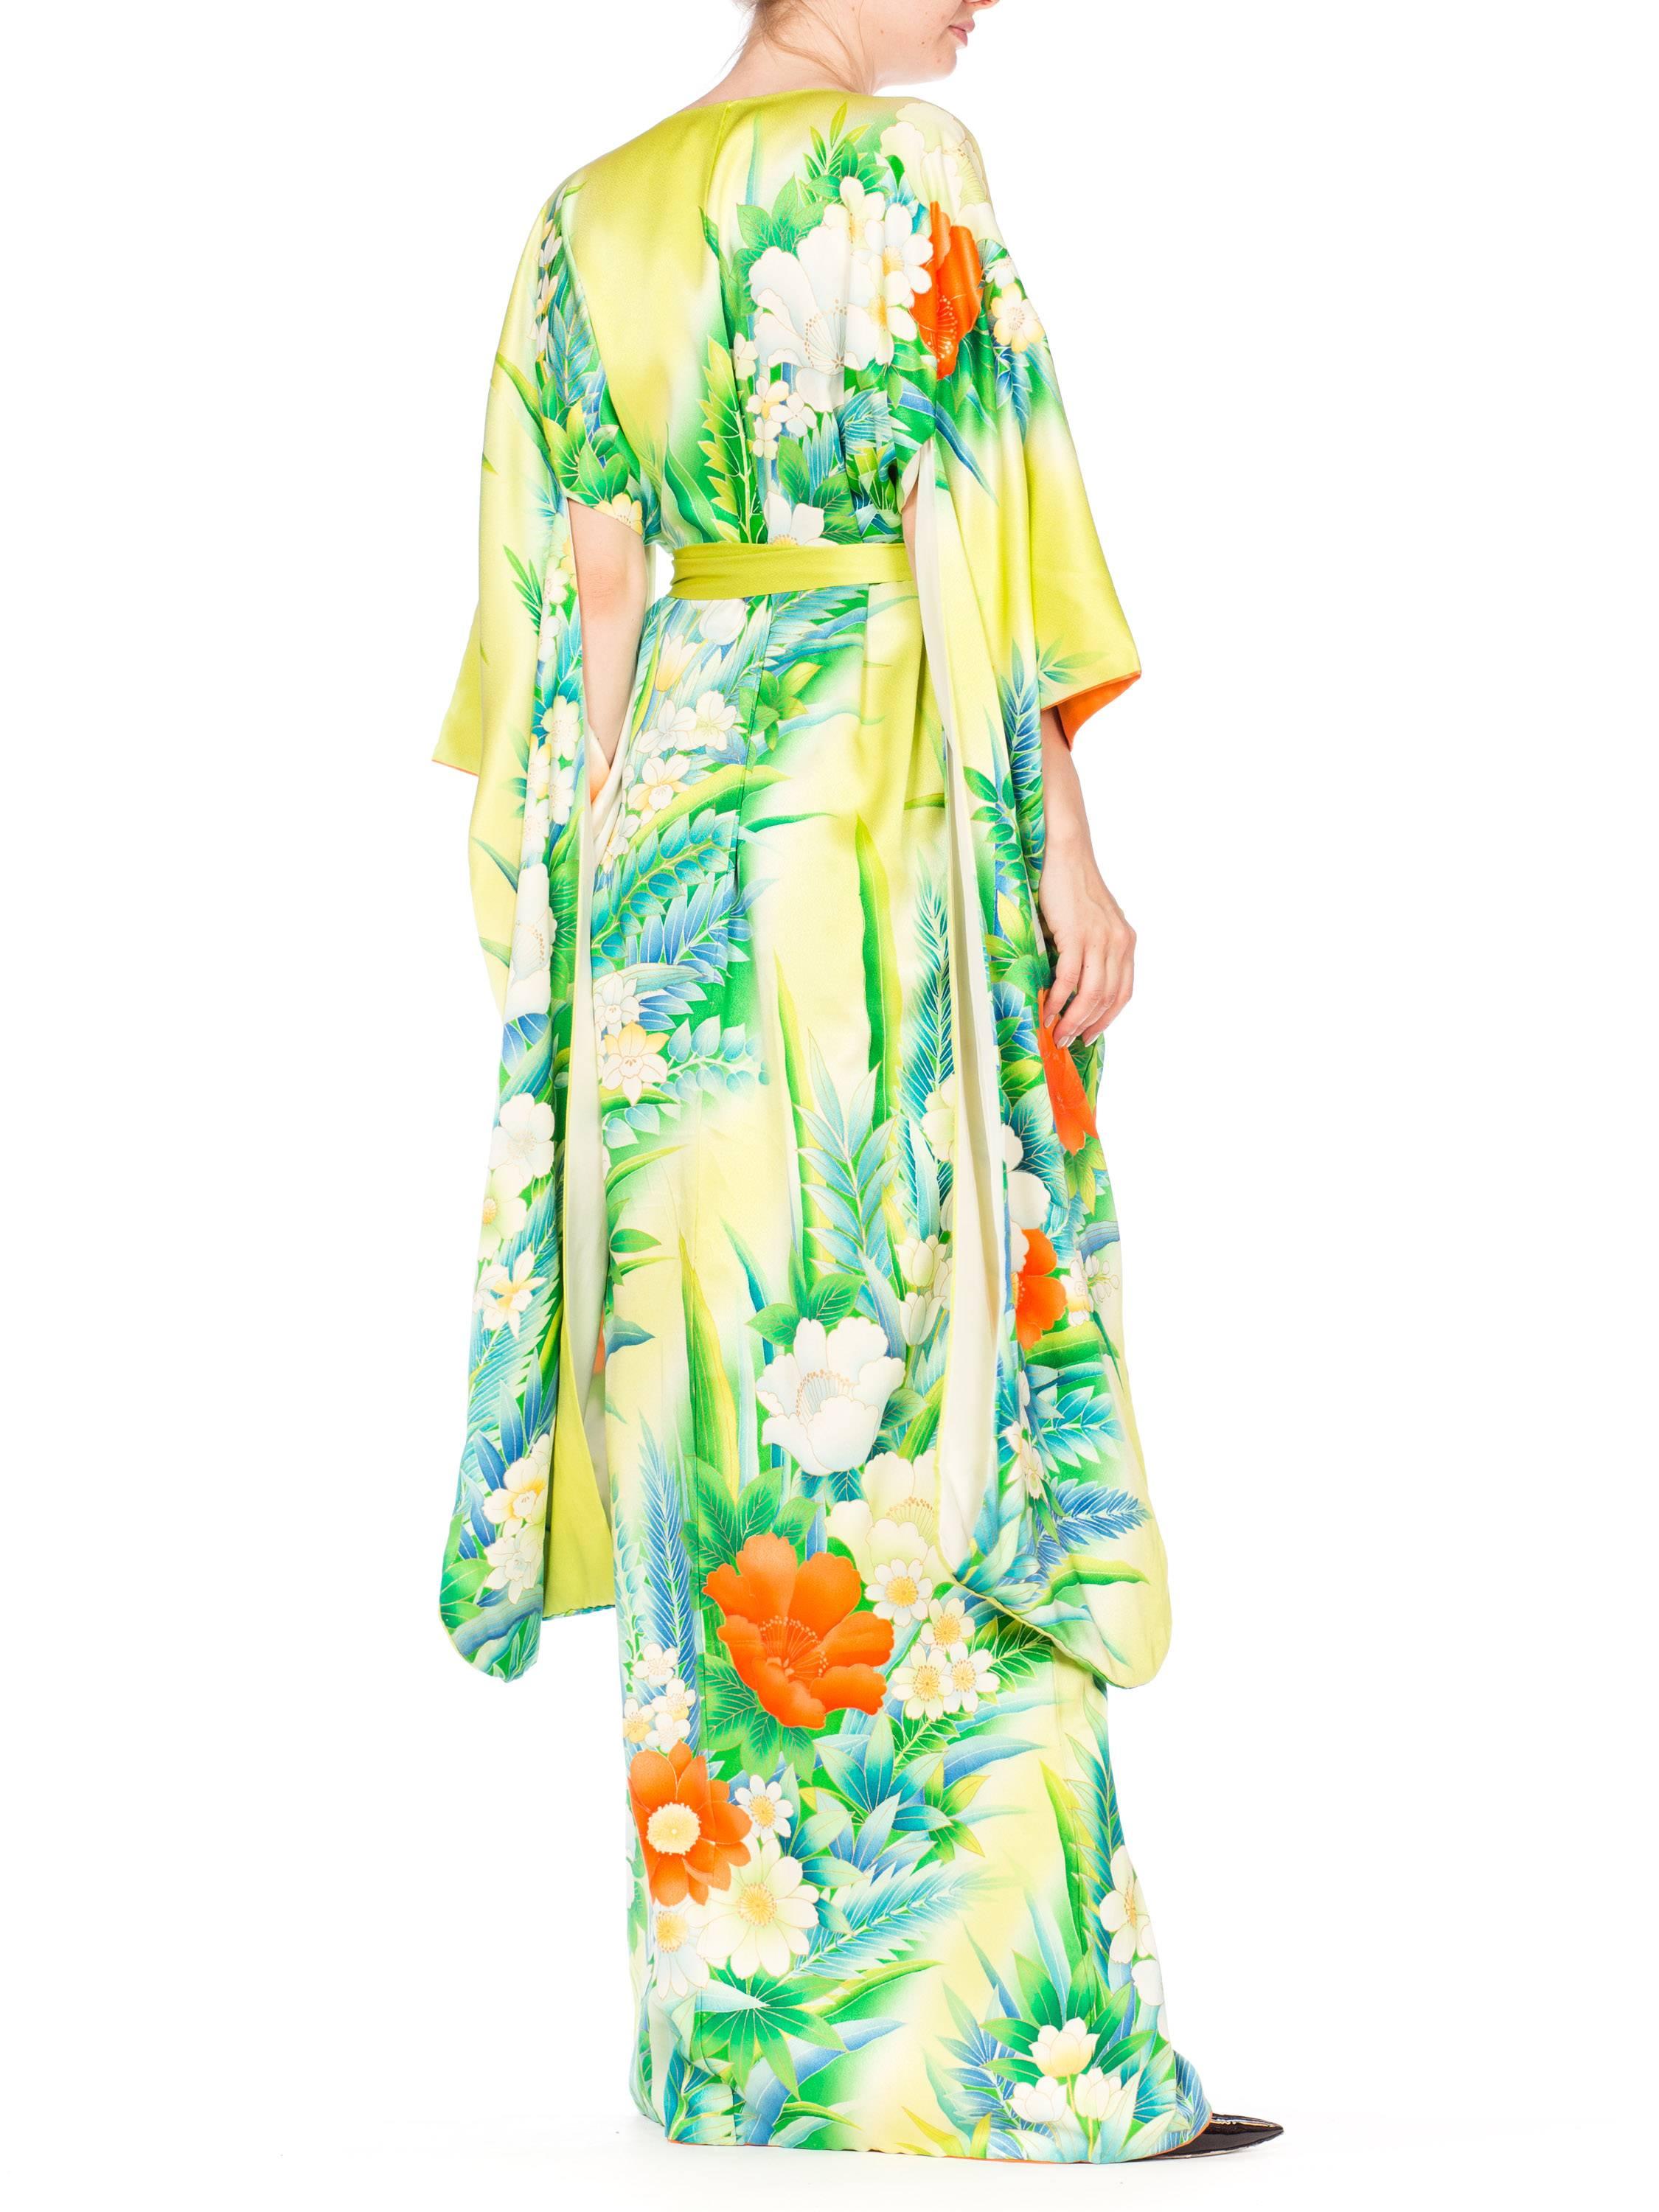 Green Morphew Collection Tropical Hand Painted Japanese Kimono Dress